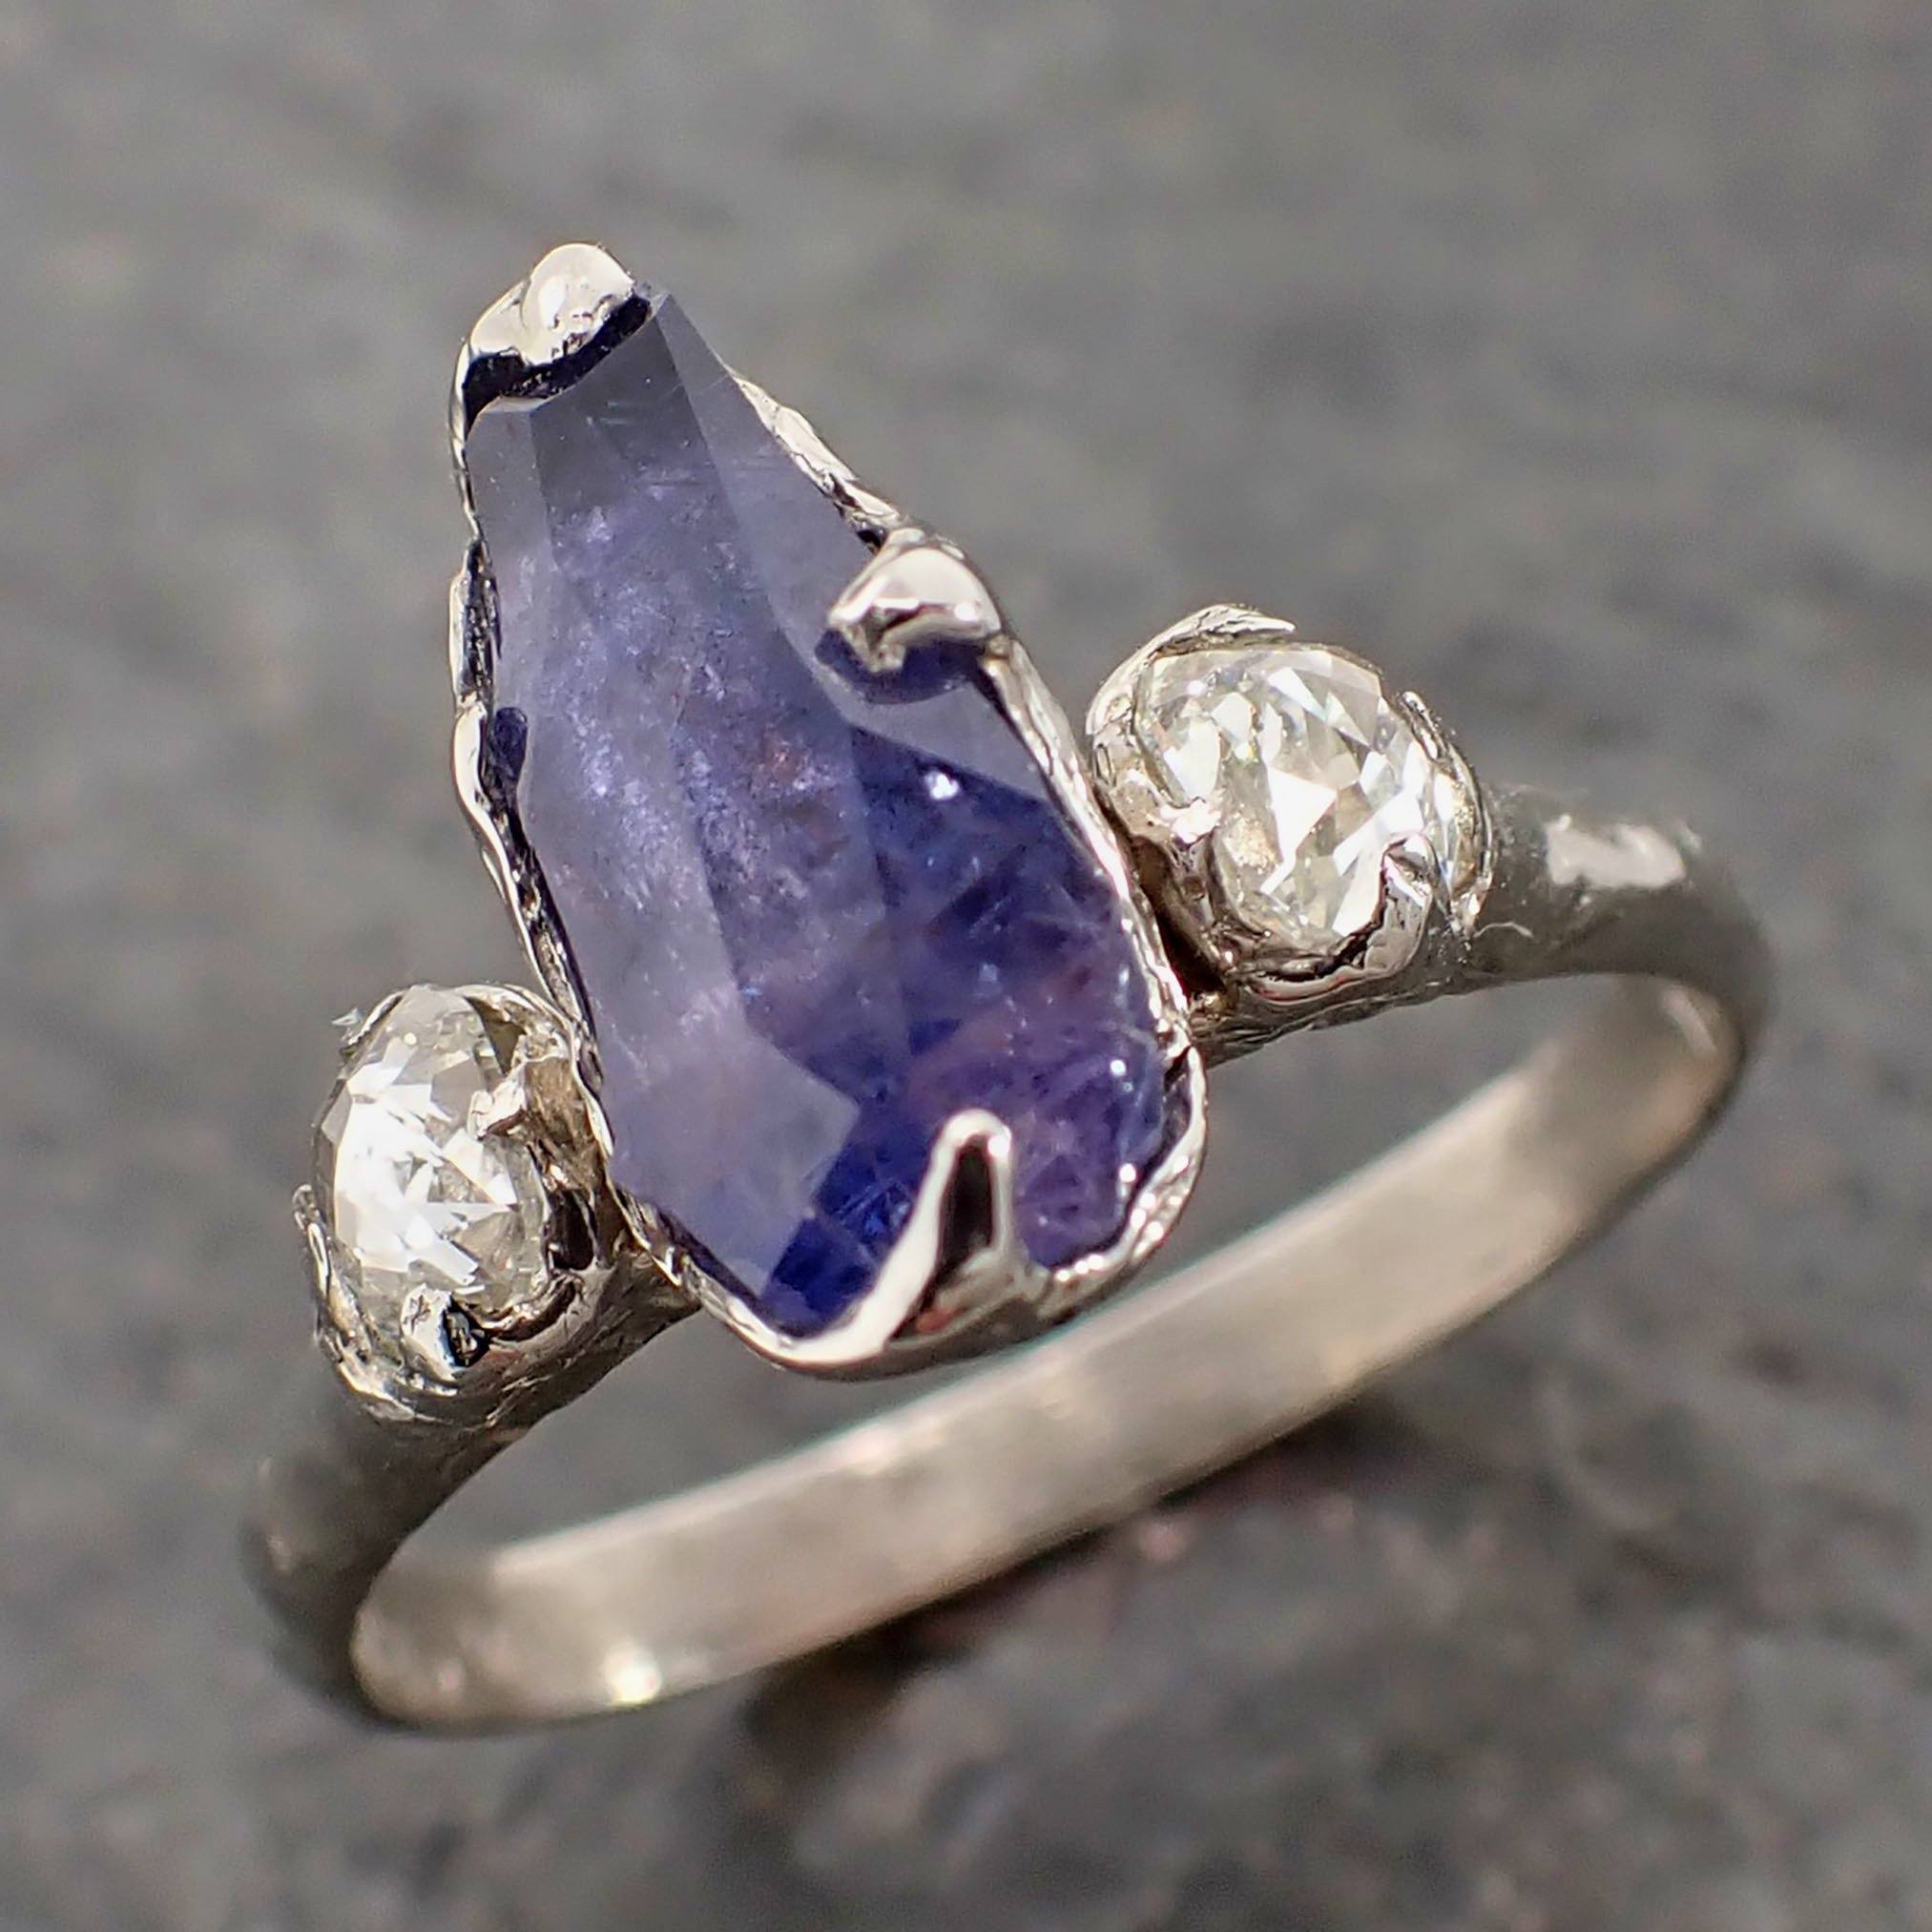 Partially Faceted Purple Sapphire side diamonds Multi stone 14k White Gold Engagement Ring Wedding Ring Custom Gemstone Ring 2161